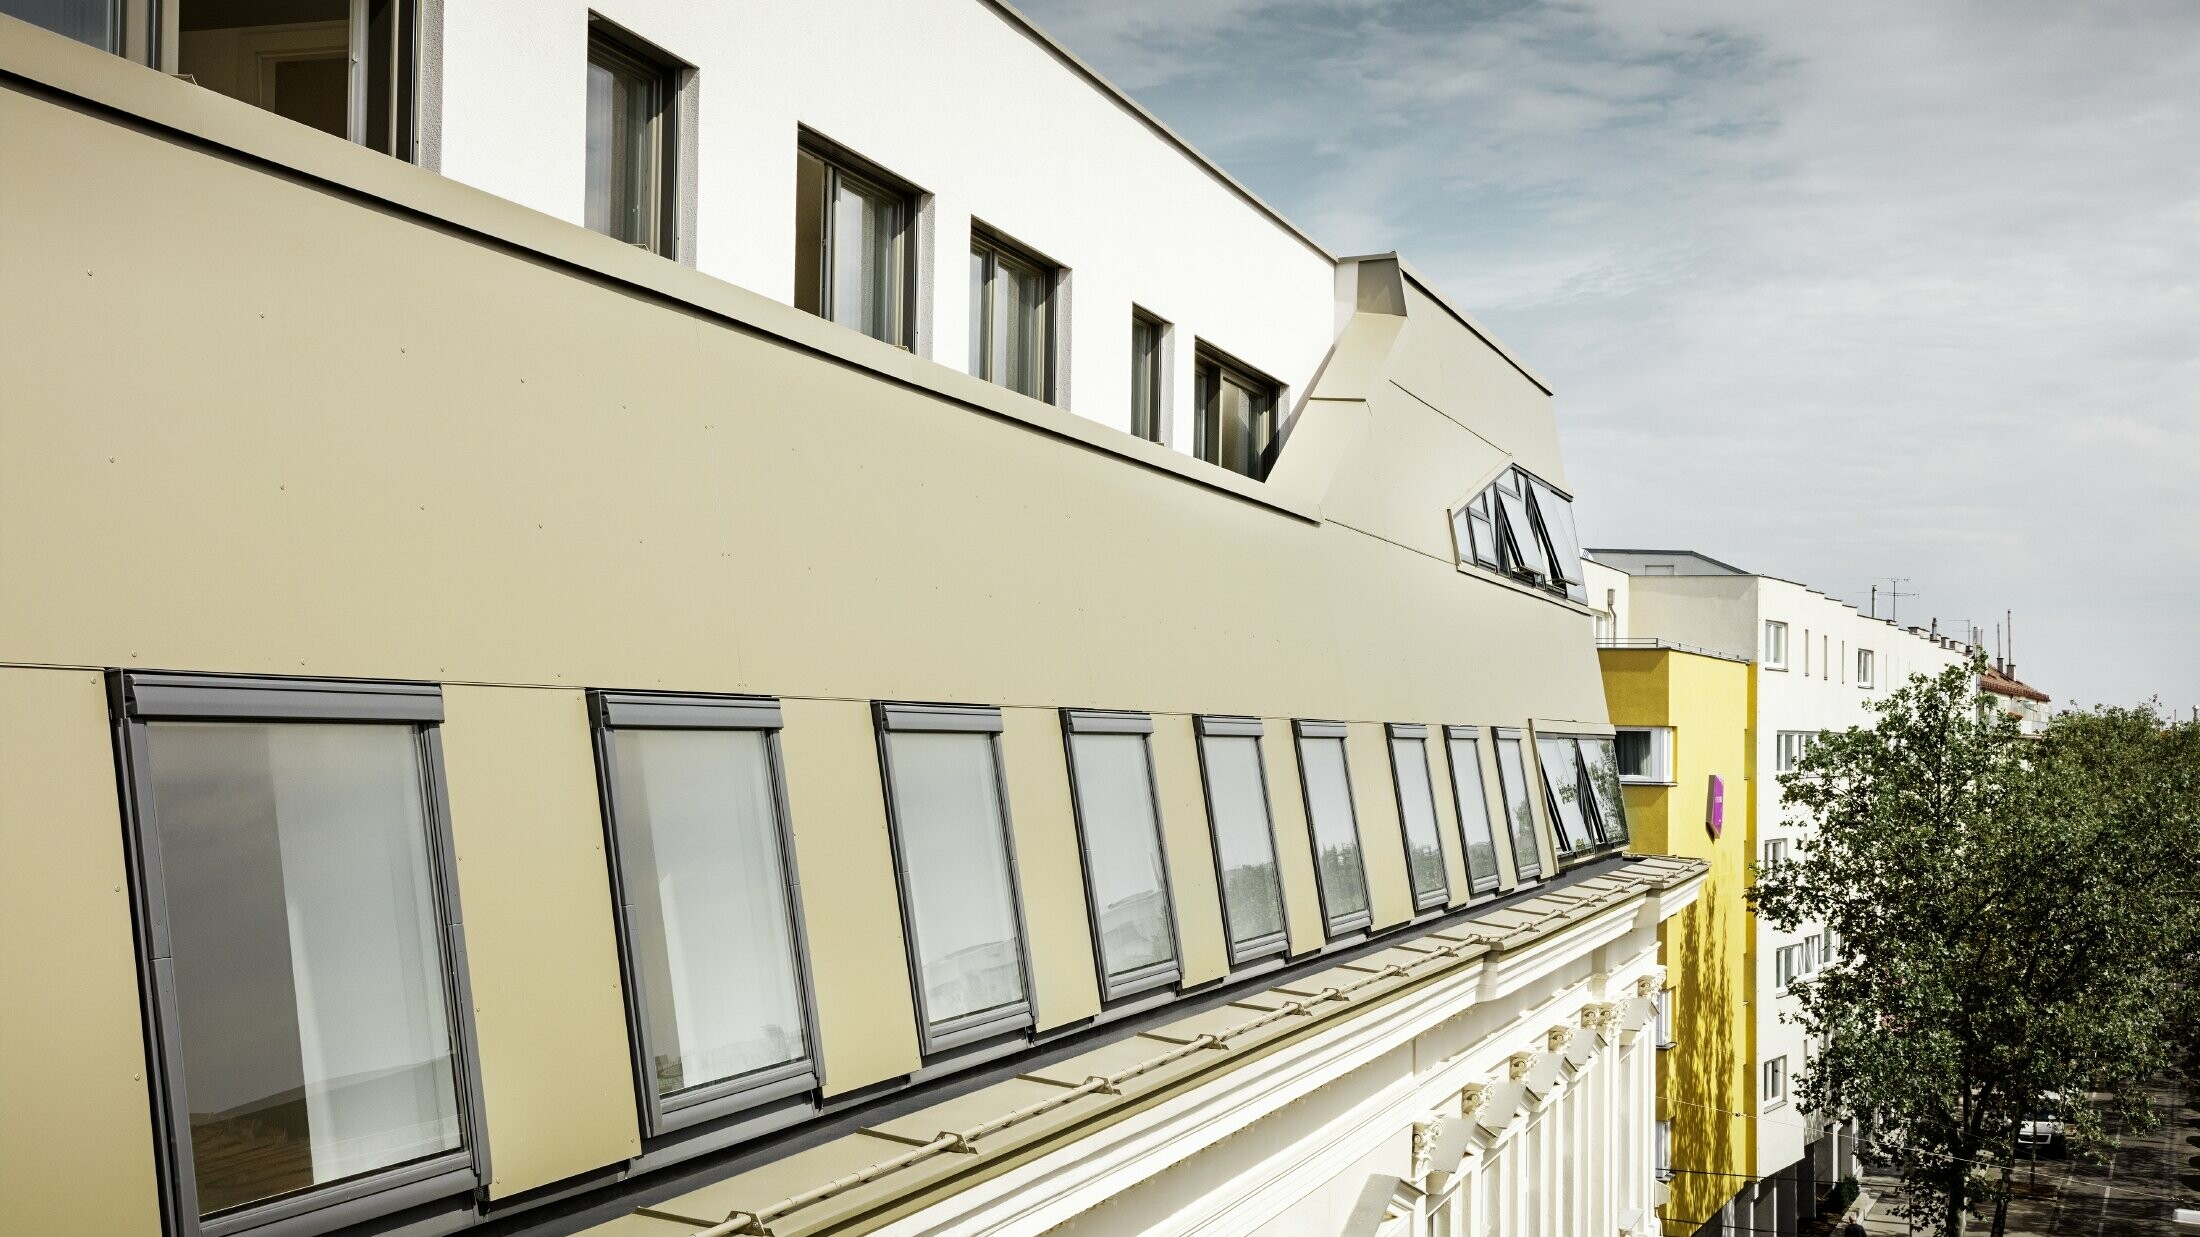 Roof extension in the Schloßhofer Straße in Vienna with PREFA aluminium composite panels in bronze